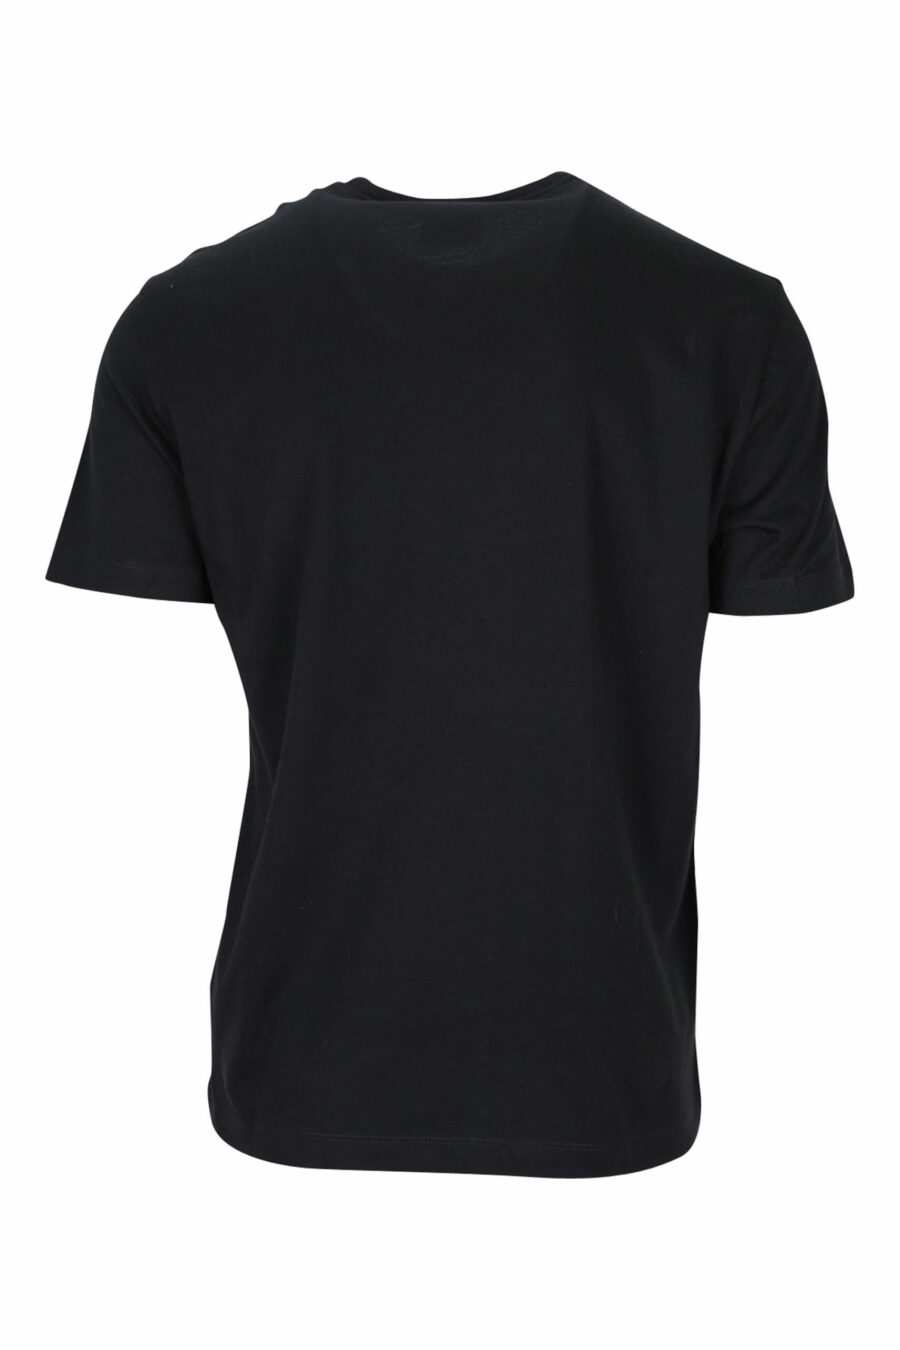 Camiseta negra con maxilogo "lux identity" blanco - 8057767688400 1 scaled